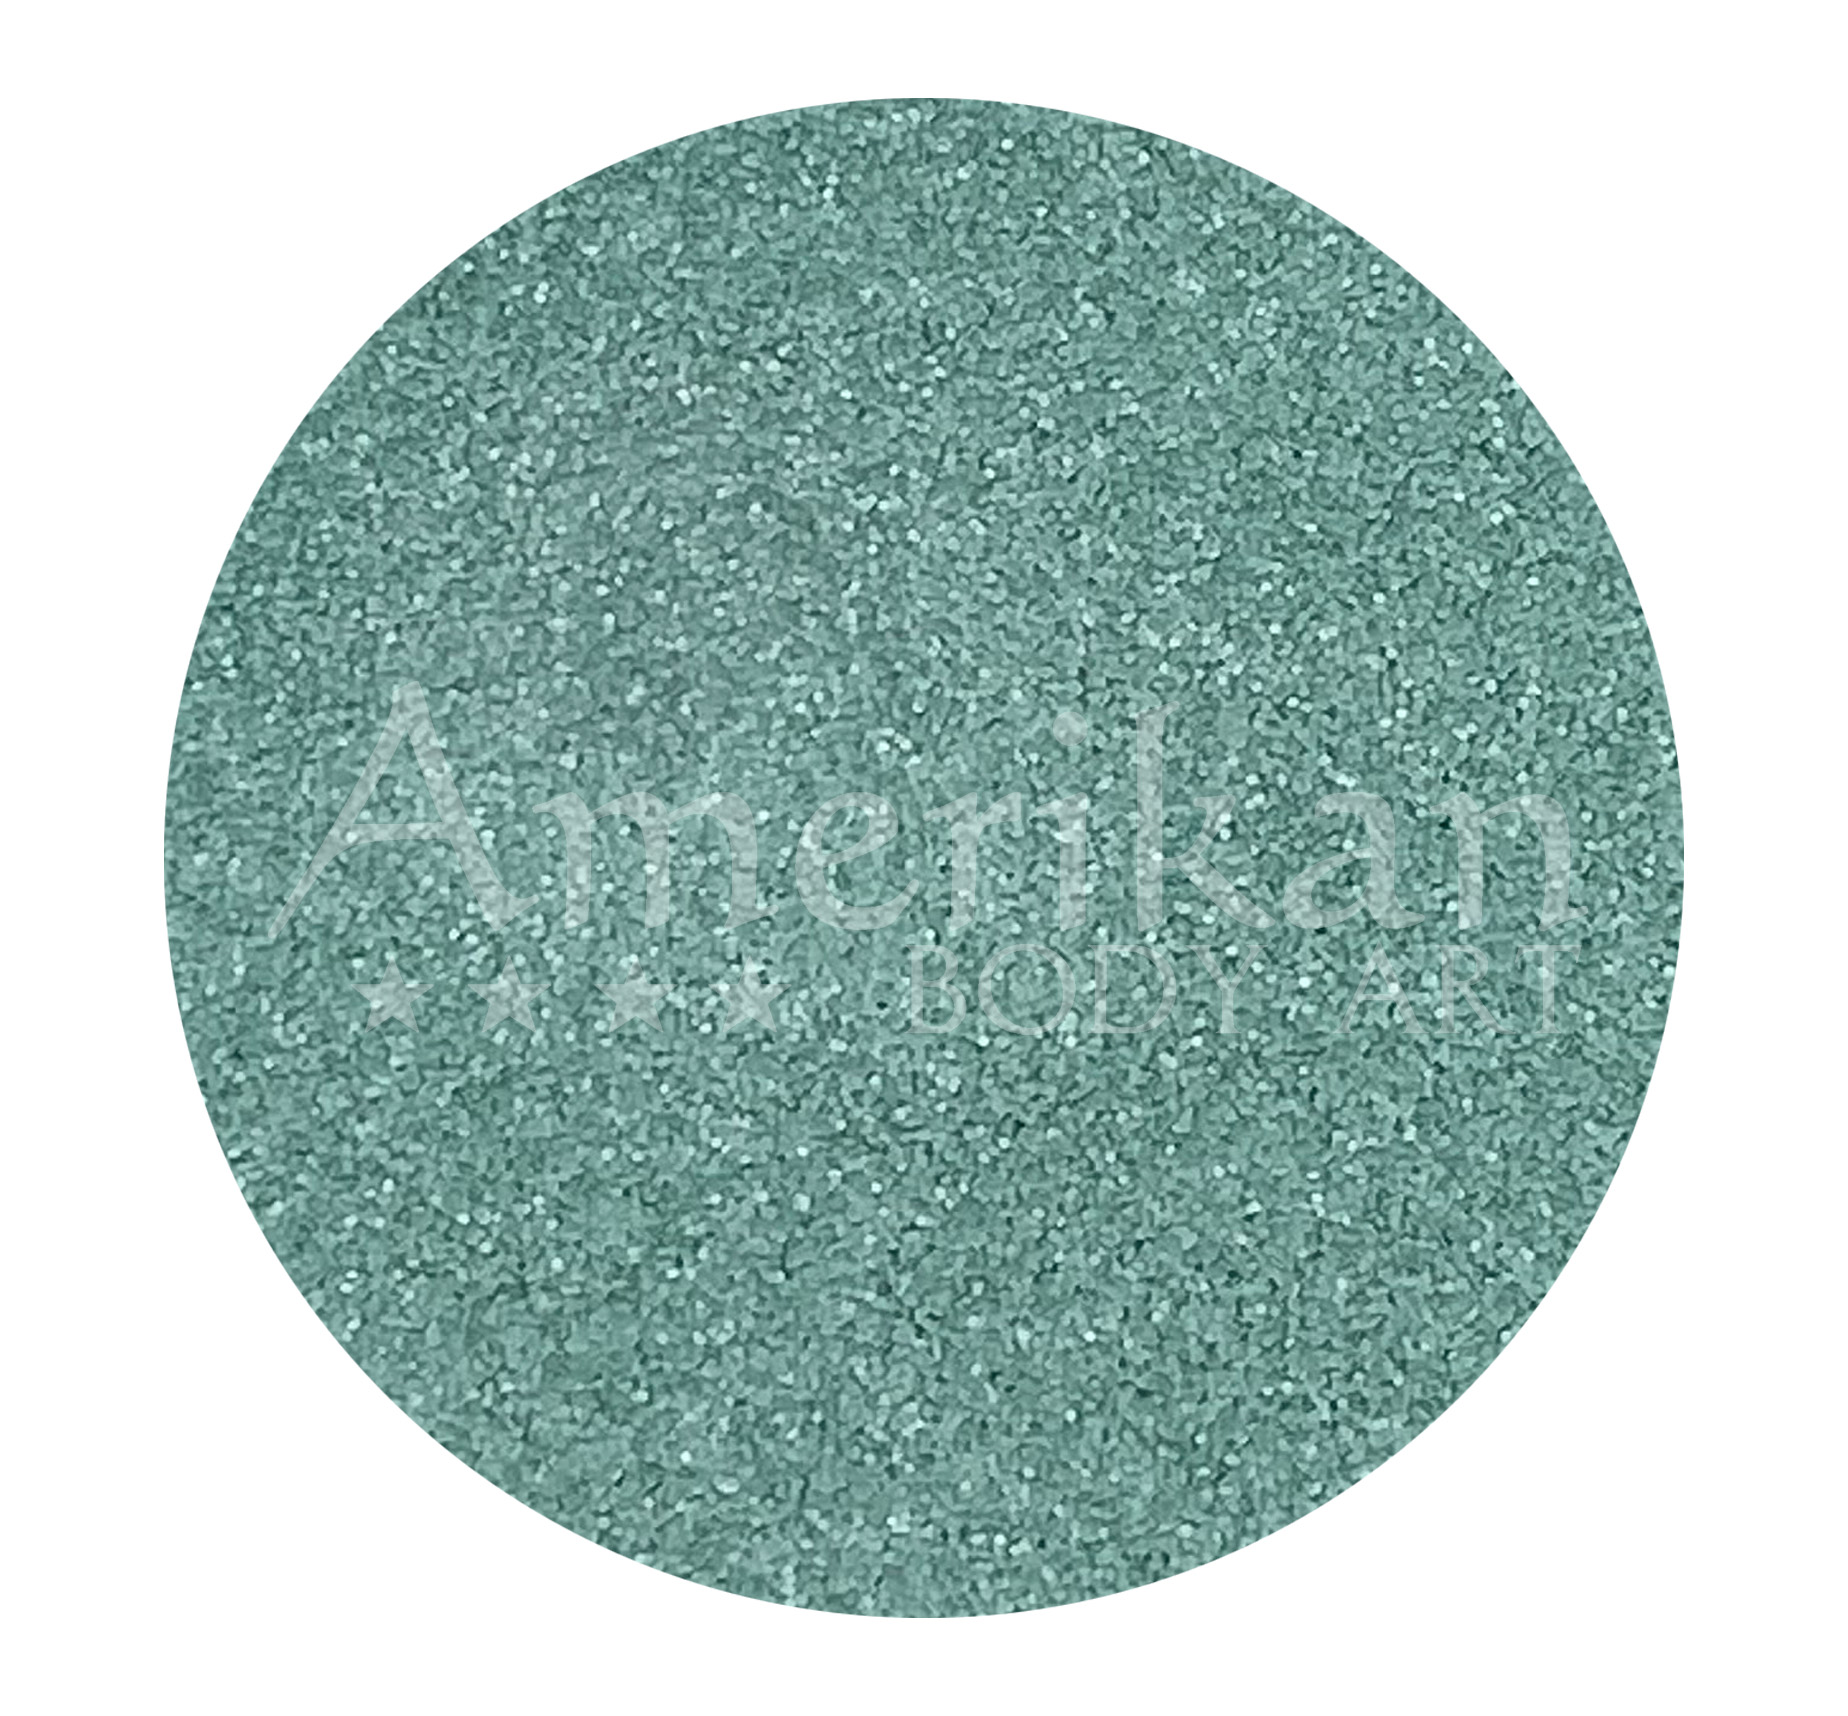 Seafoam Green Ultrafine Glitter